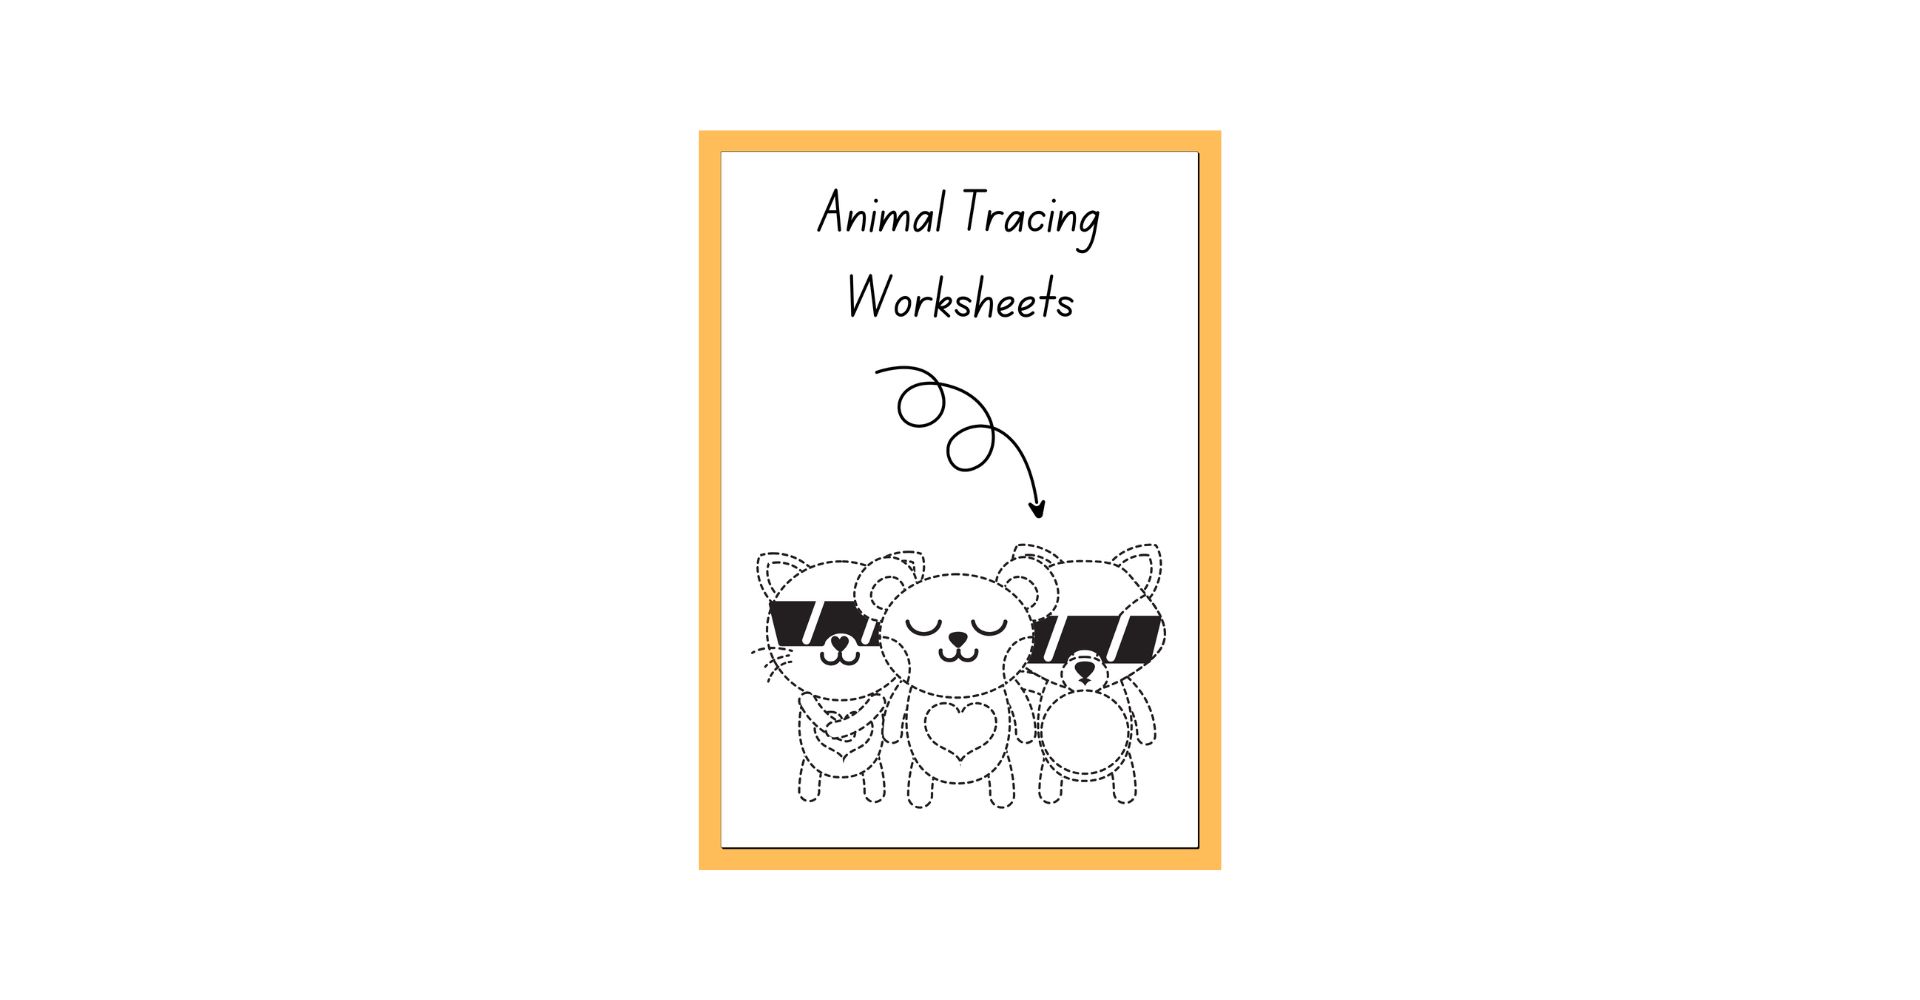 Animal Tracing Worksheets